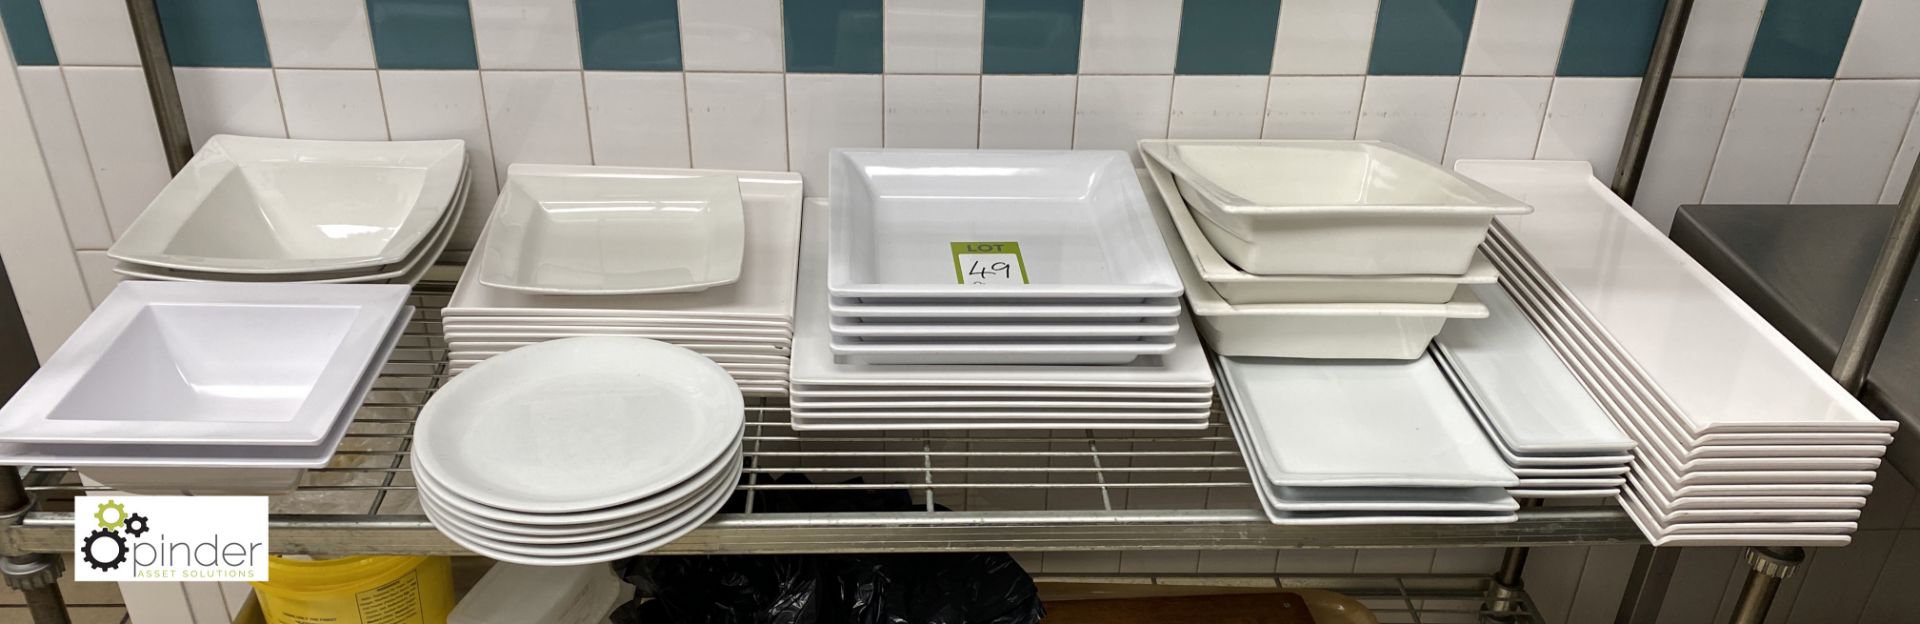 Quantity various shaped Platters/Plates/Bowls (rack is lot 50)